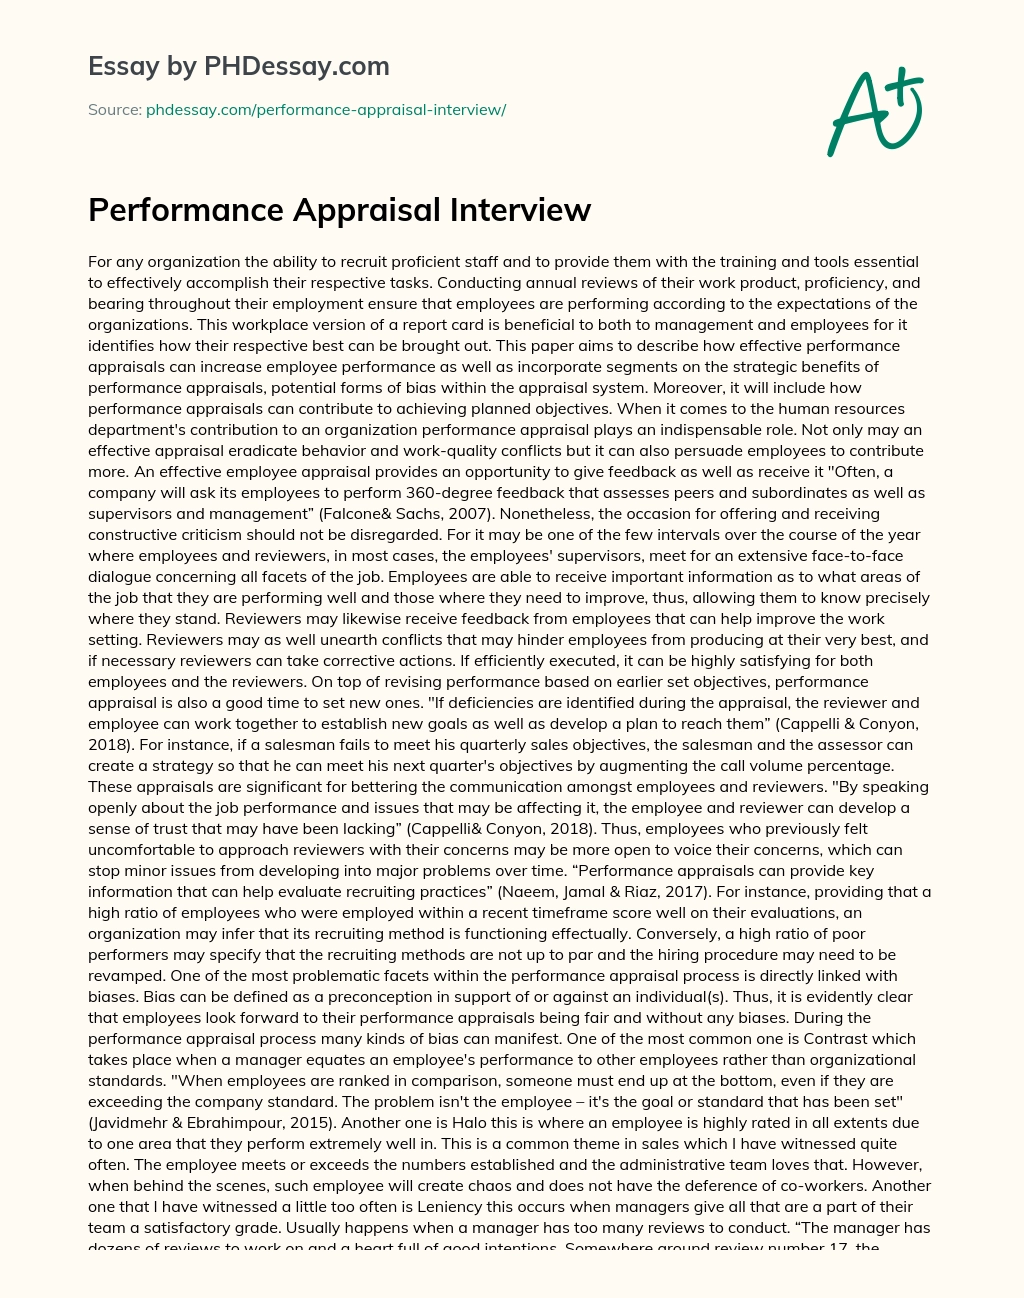 Performance Appraisal Interview essay